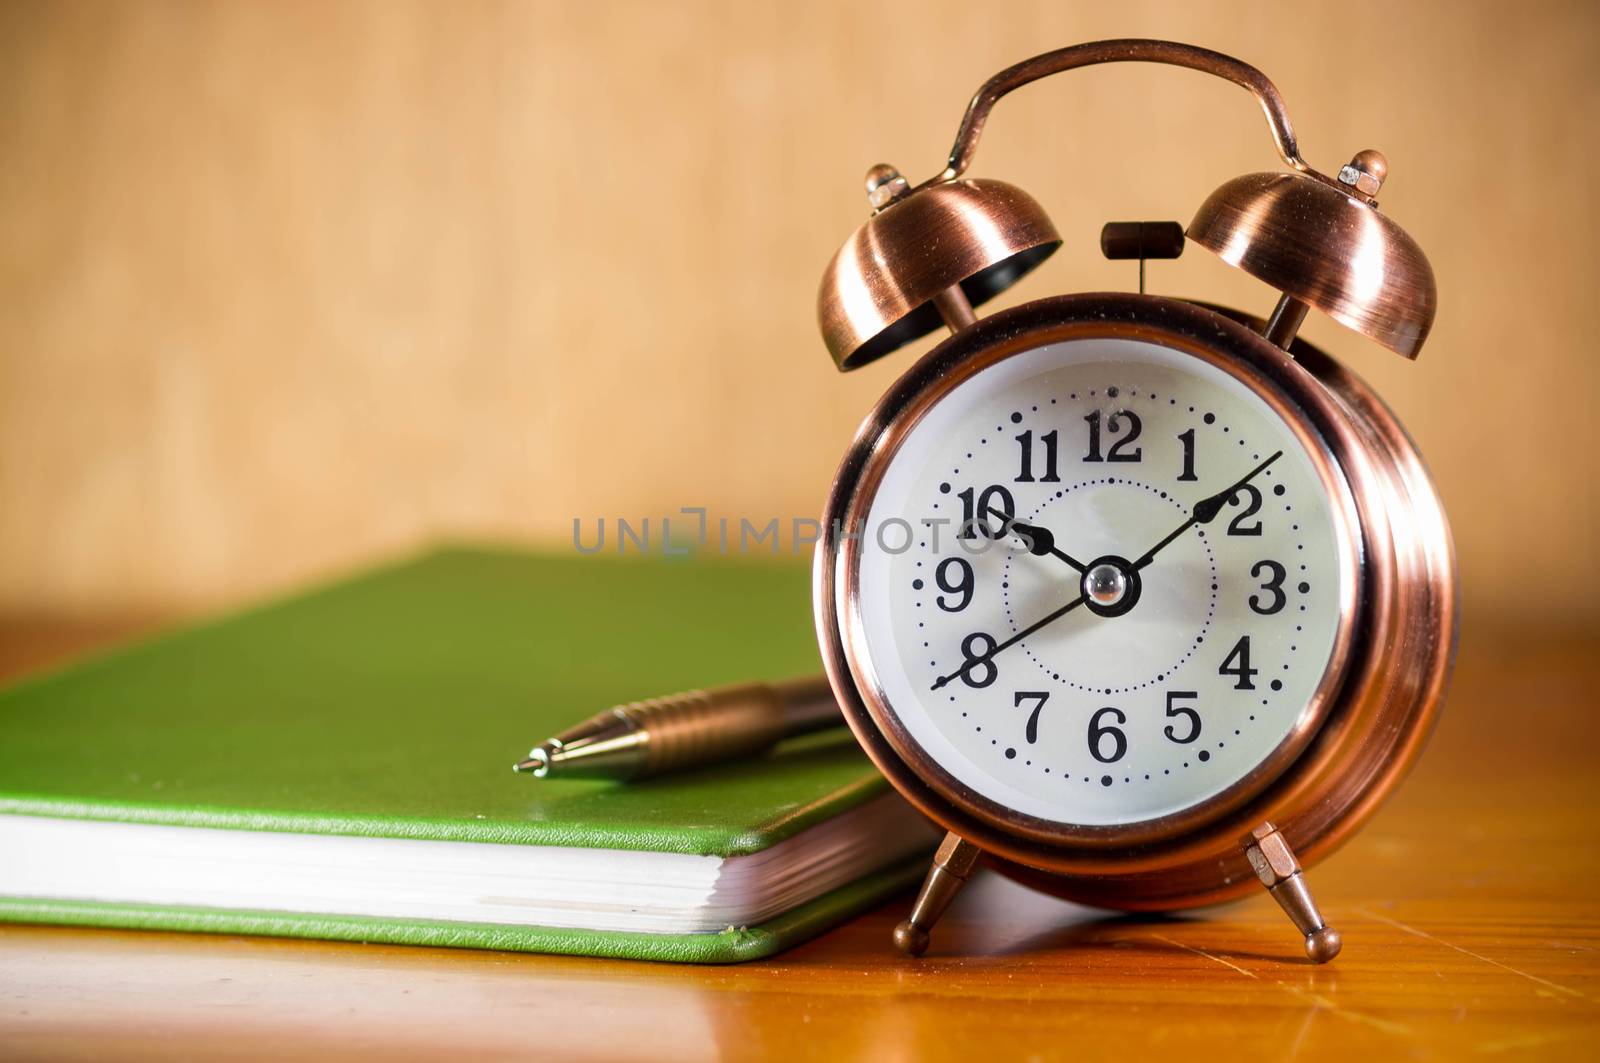 Retro alarm clock with books by seksan44